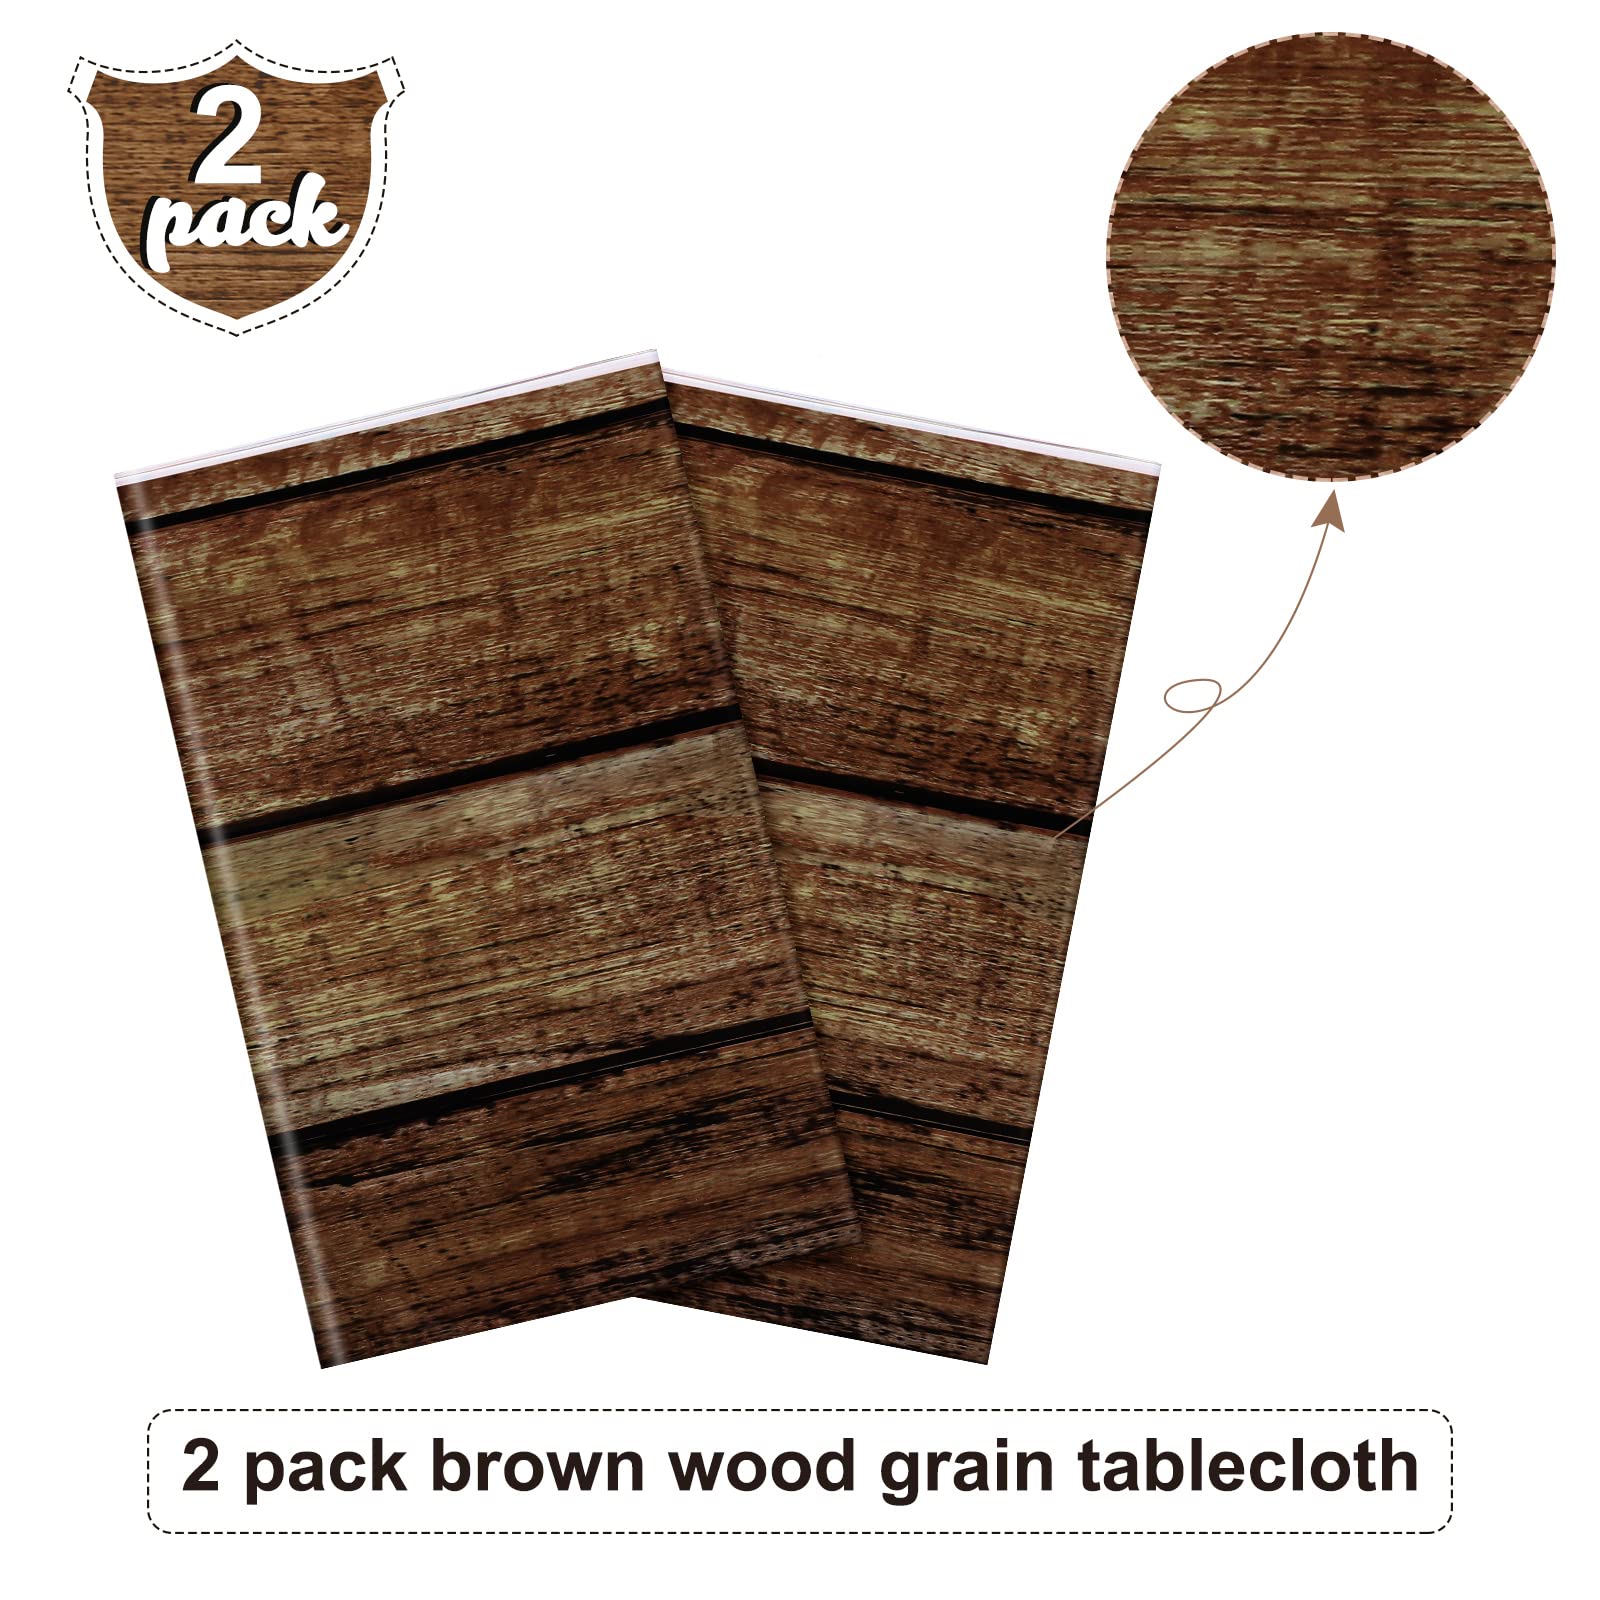 2 pack brown woodgrain tablecloth